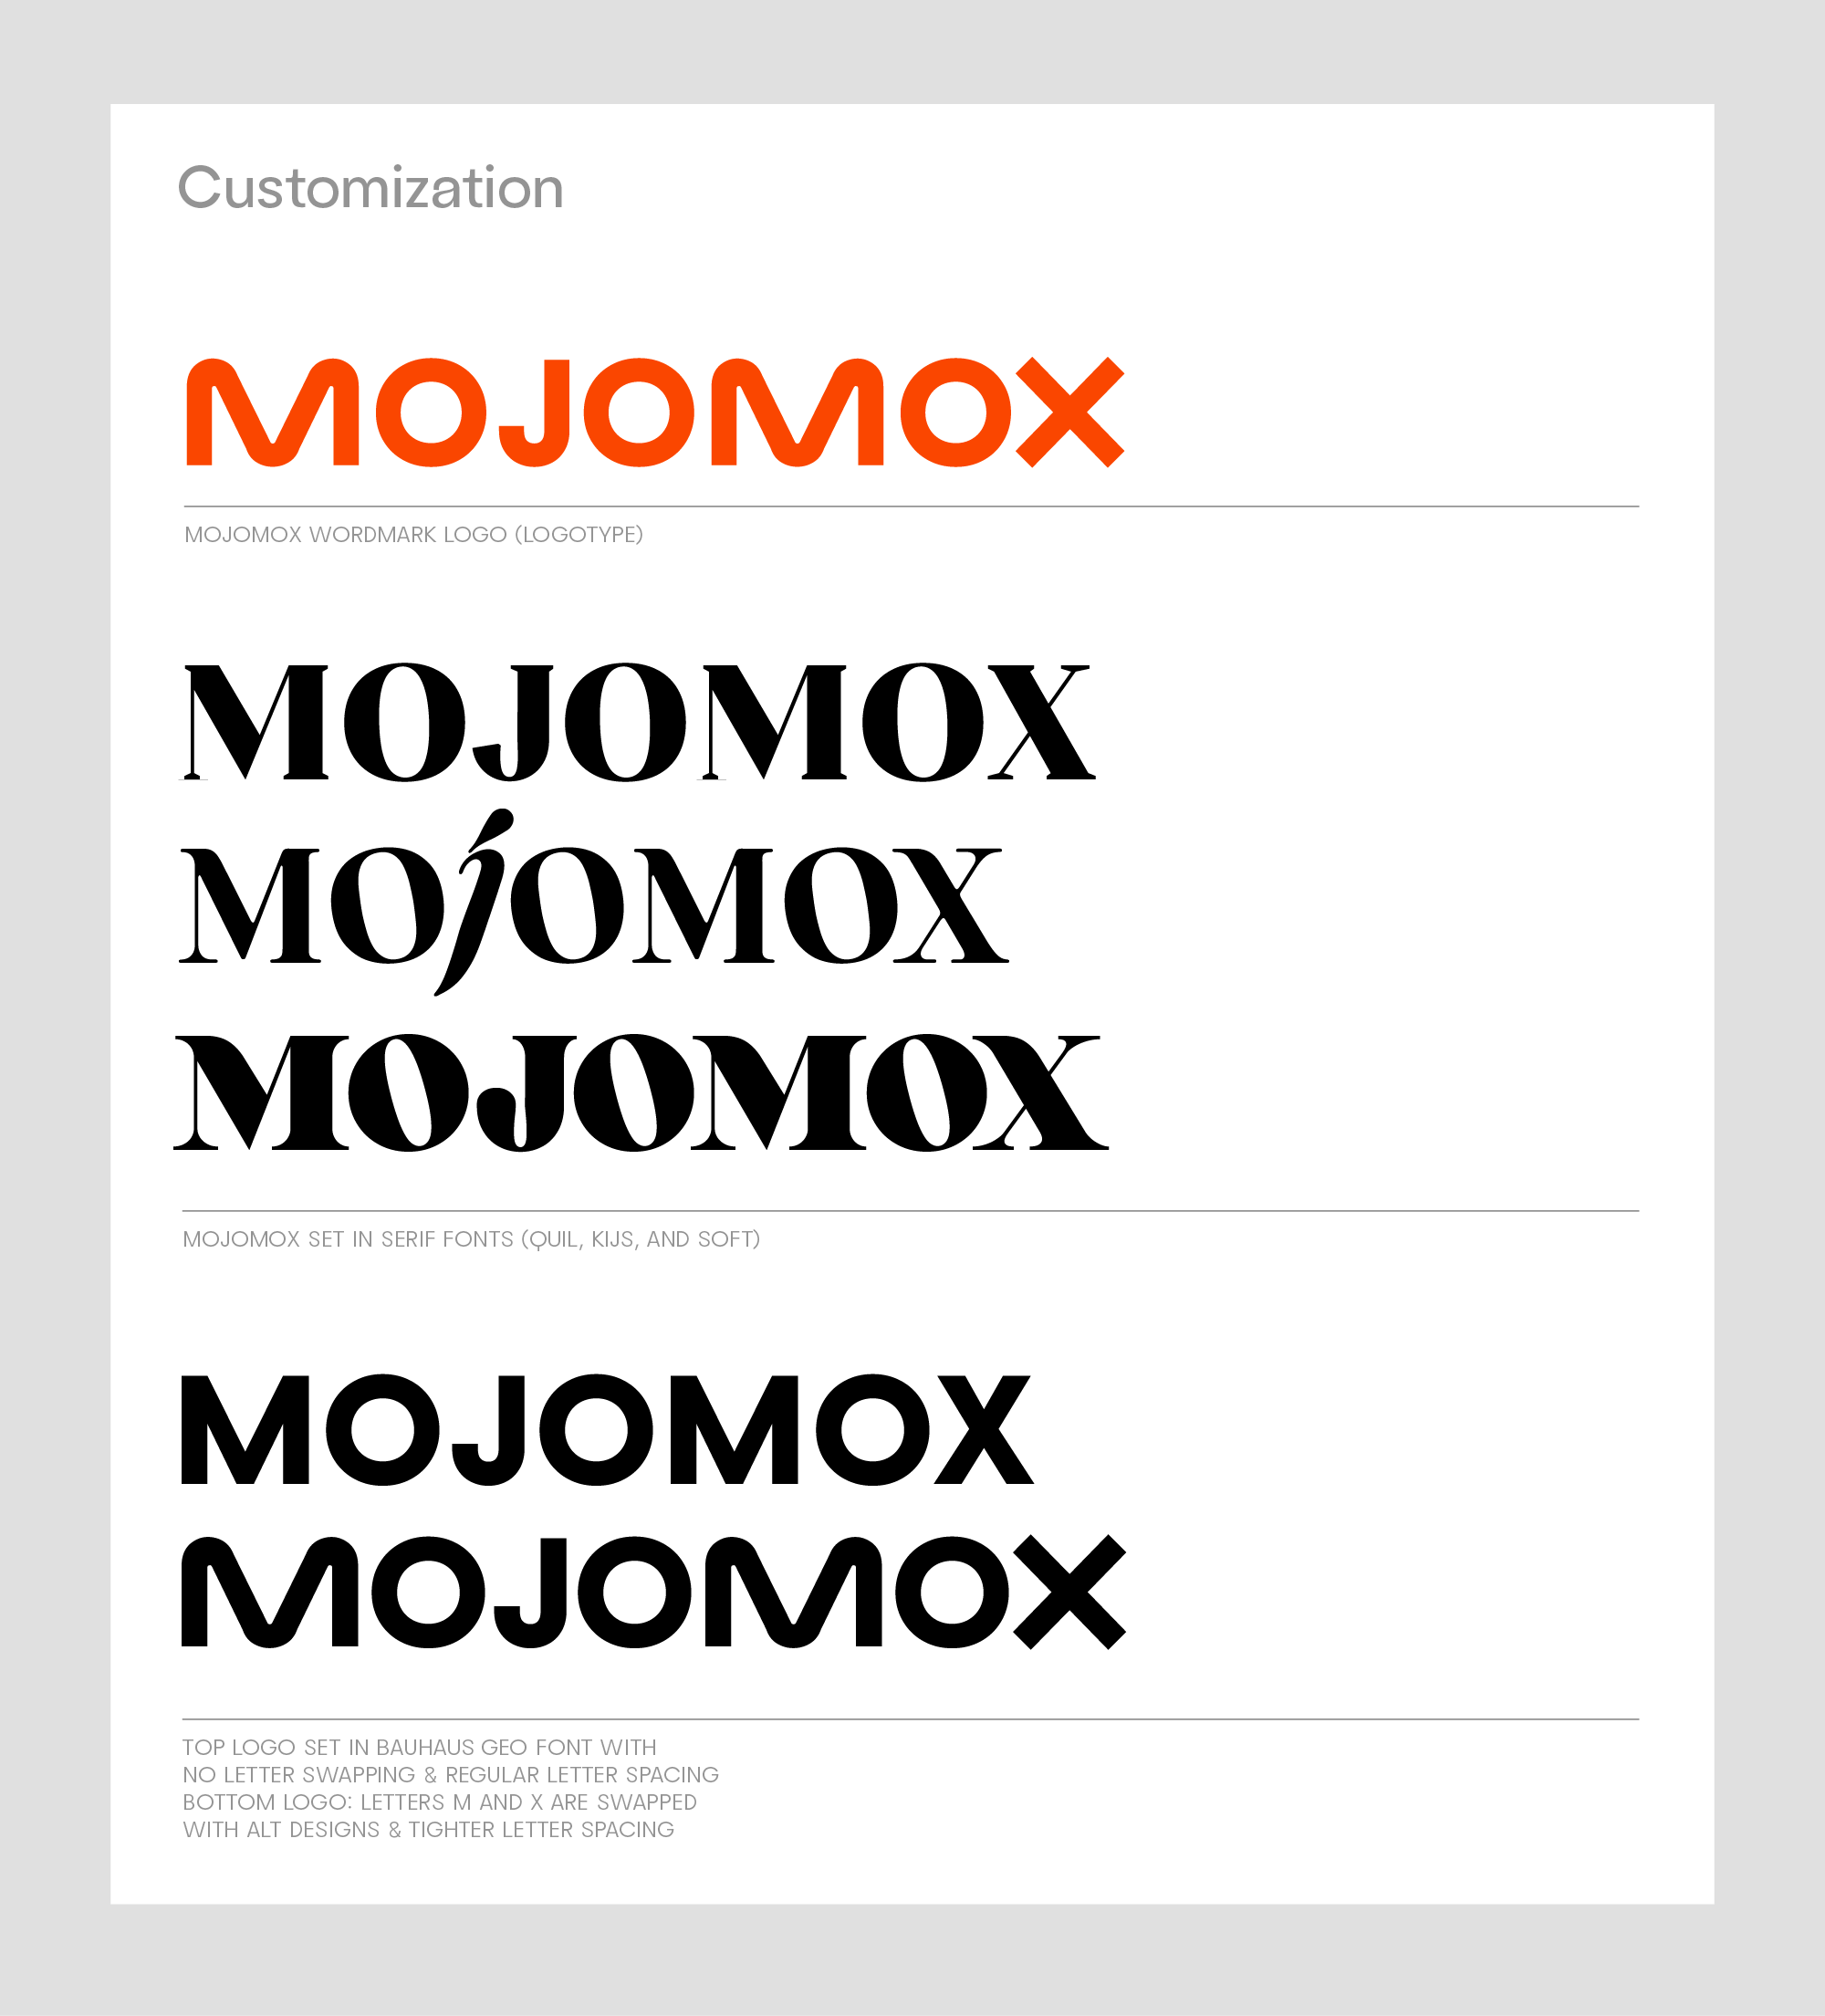 Mojomox logo example for wordmark customization